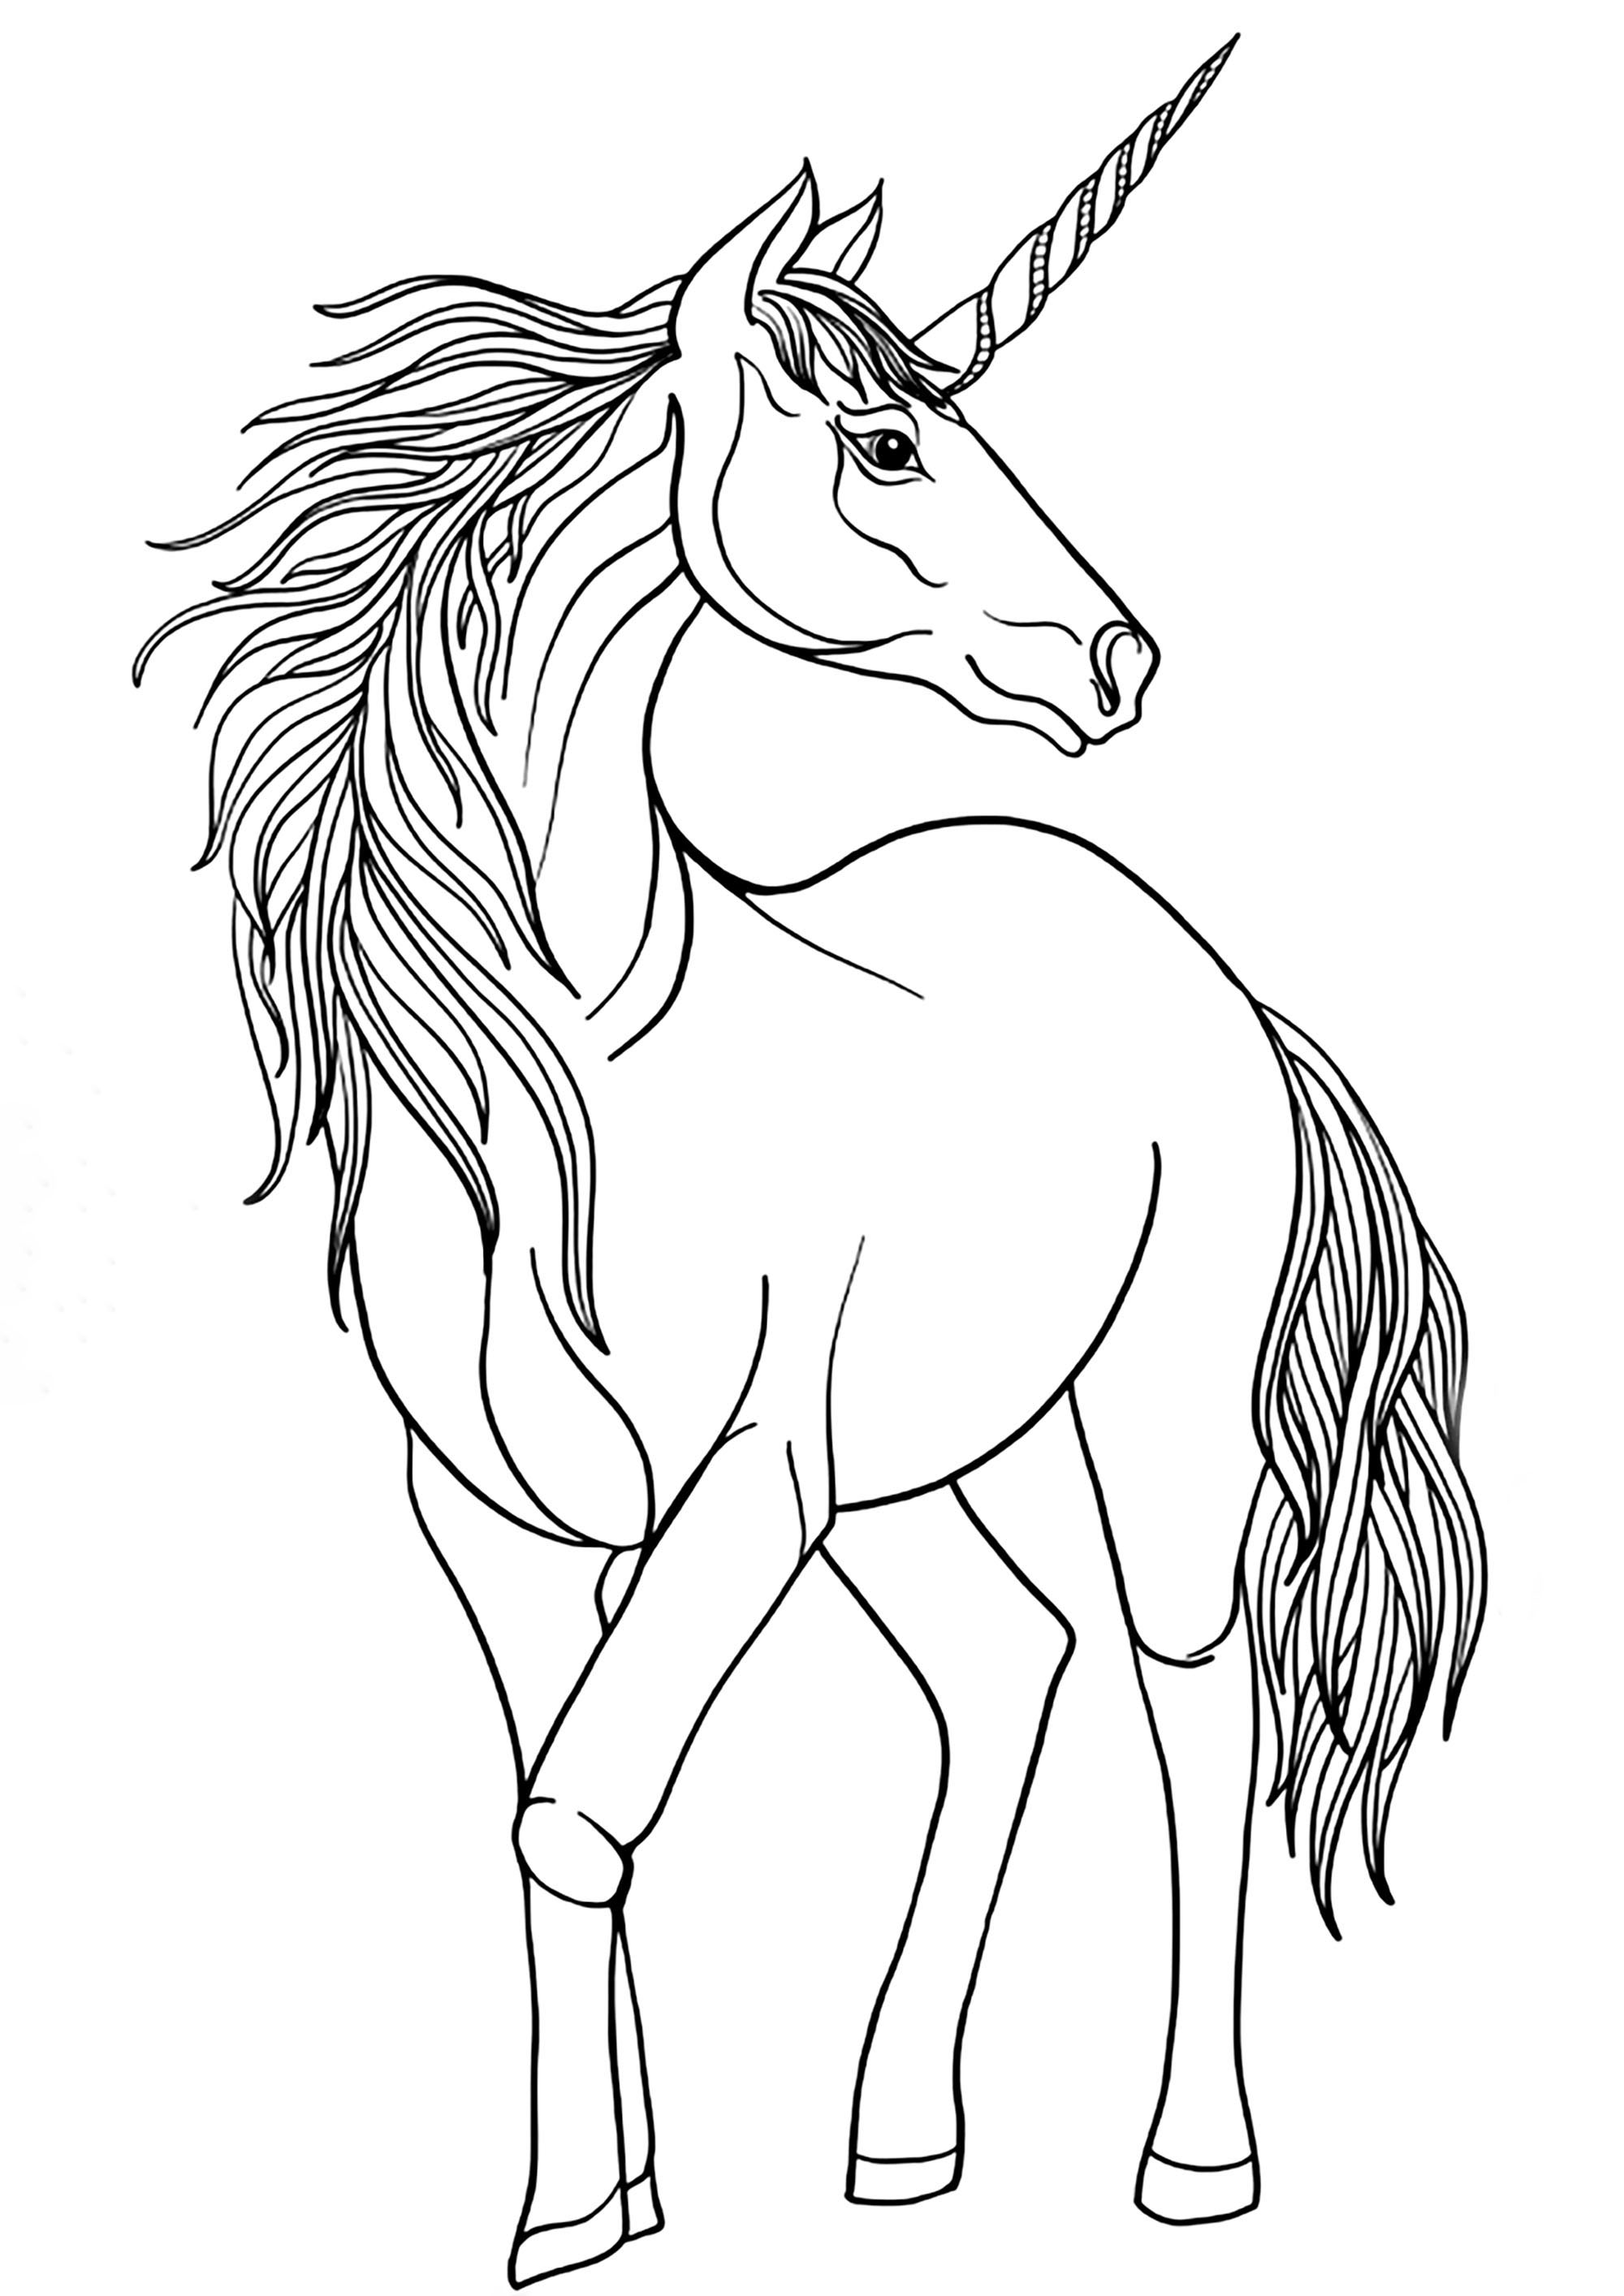 Great majestic unicorn, Source : 123rf   Artist : Helenlane